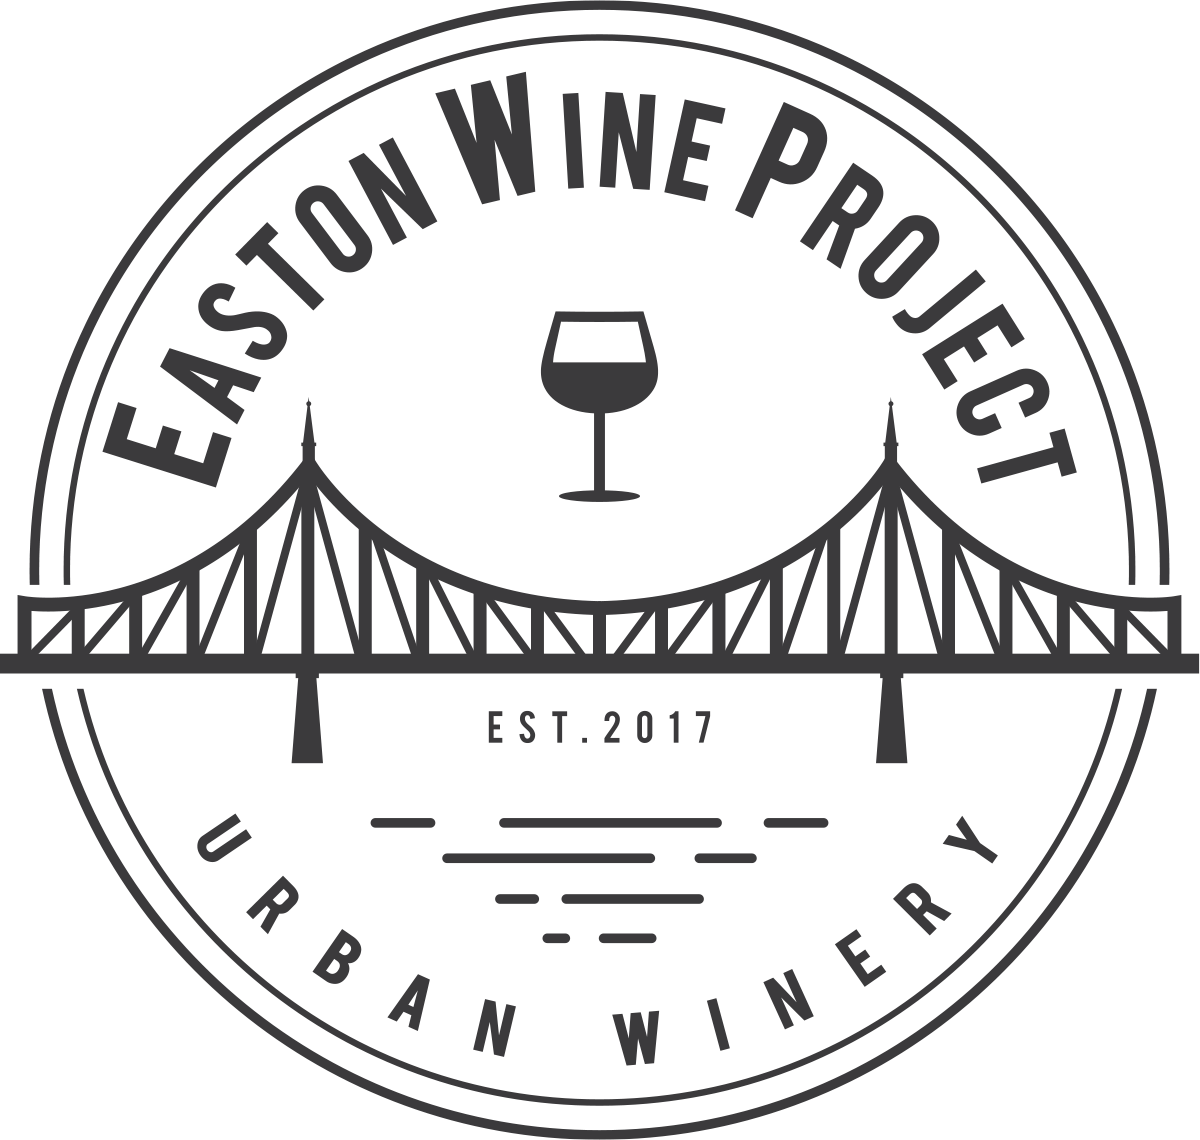 Easton Wine Project